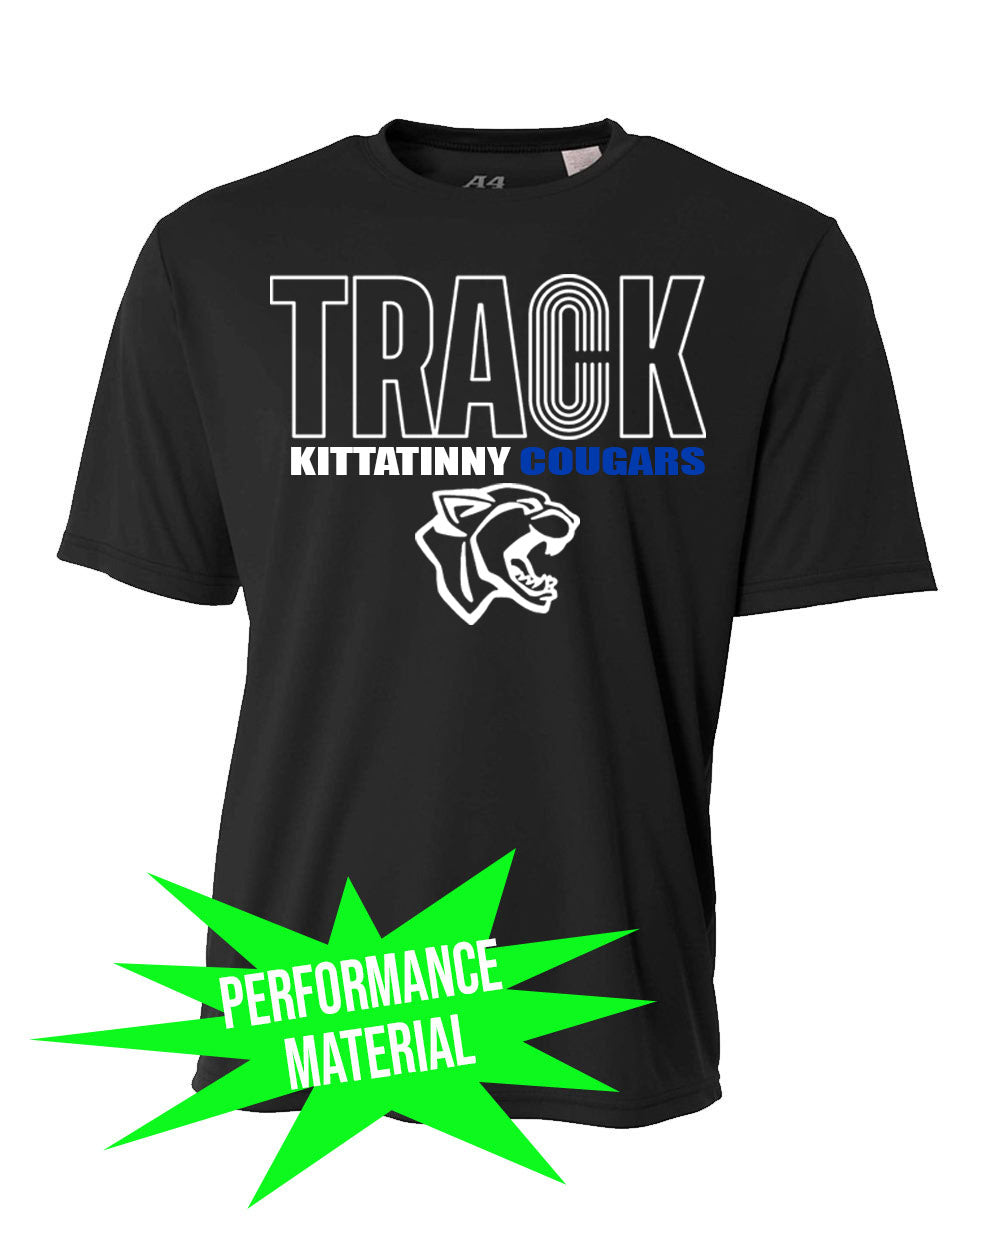 Kittatinny Track Performance Material design 1 T-Shirt